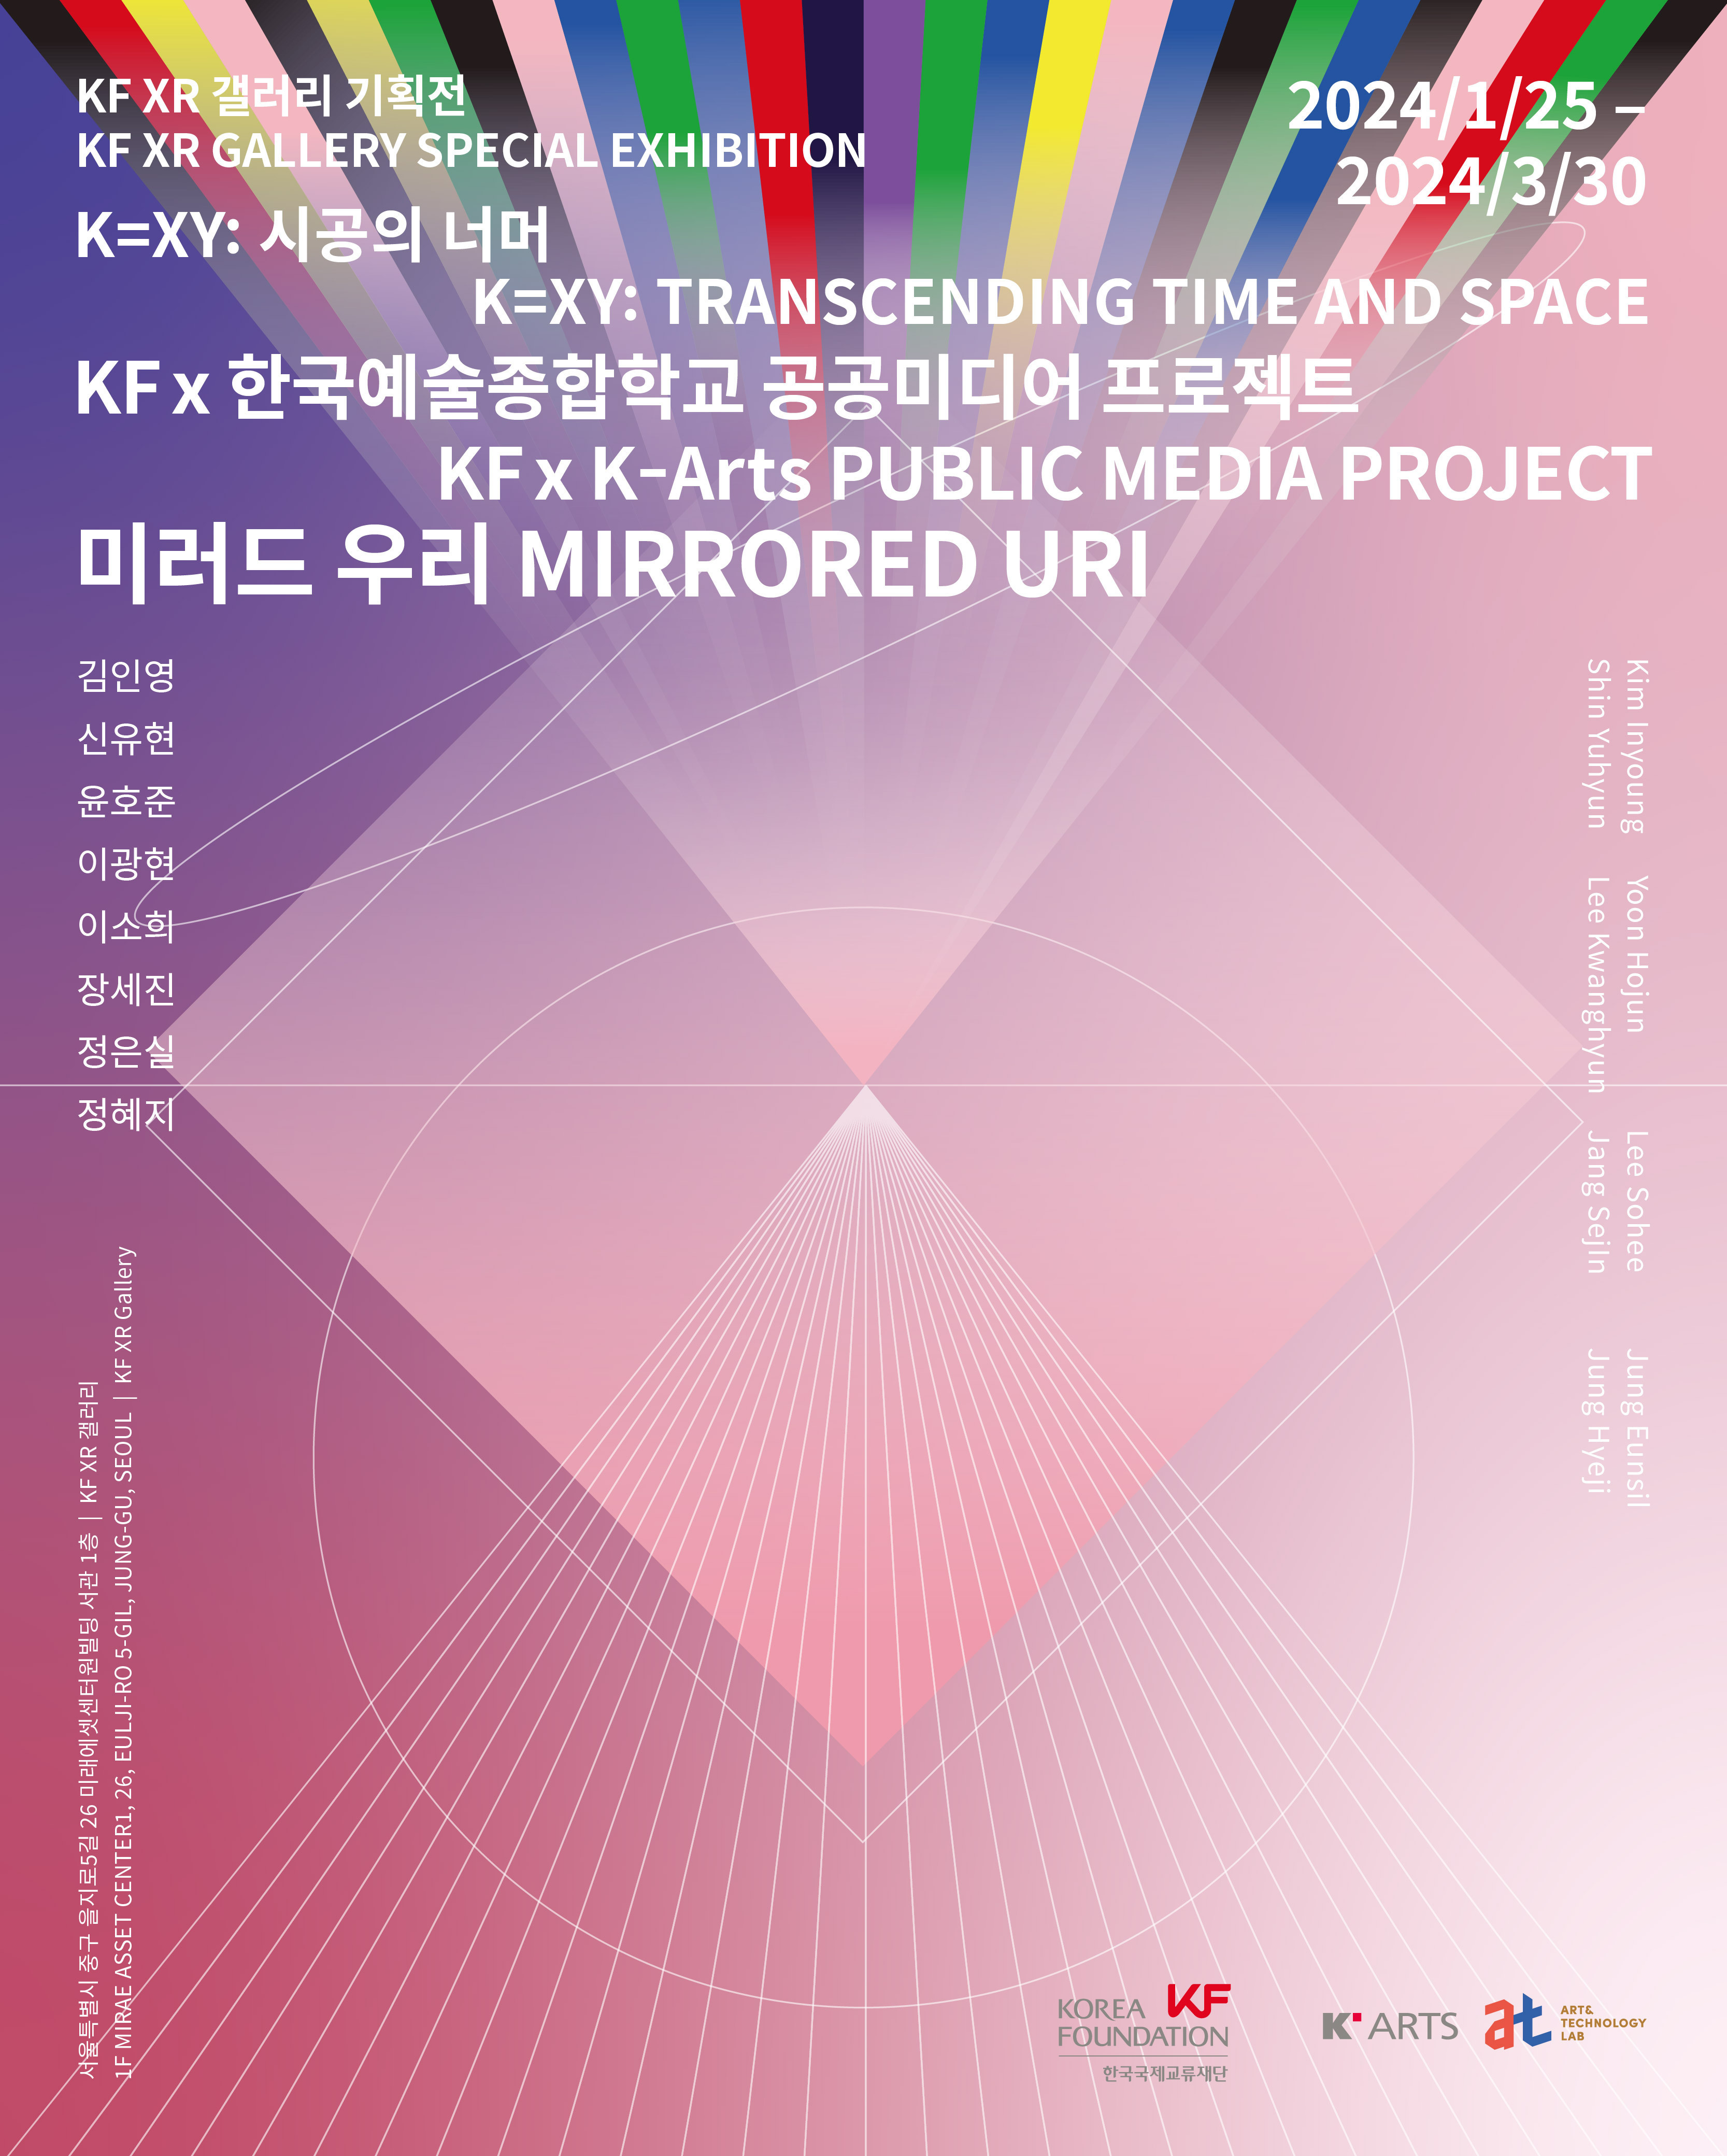 KF XR Gallery × K-Arts Collaborative Exhibition "Mirrored Uri" Opens